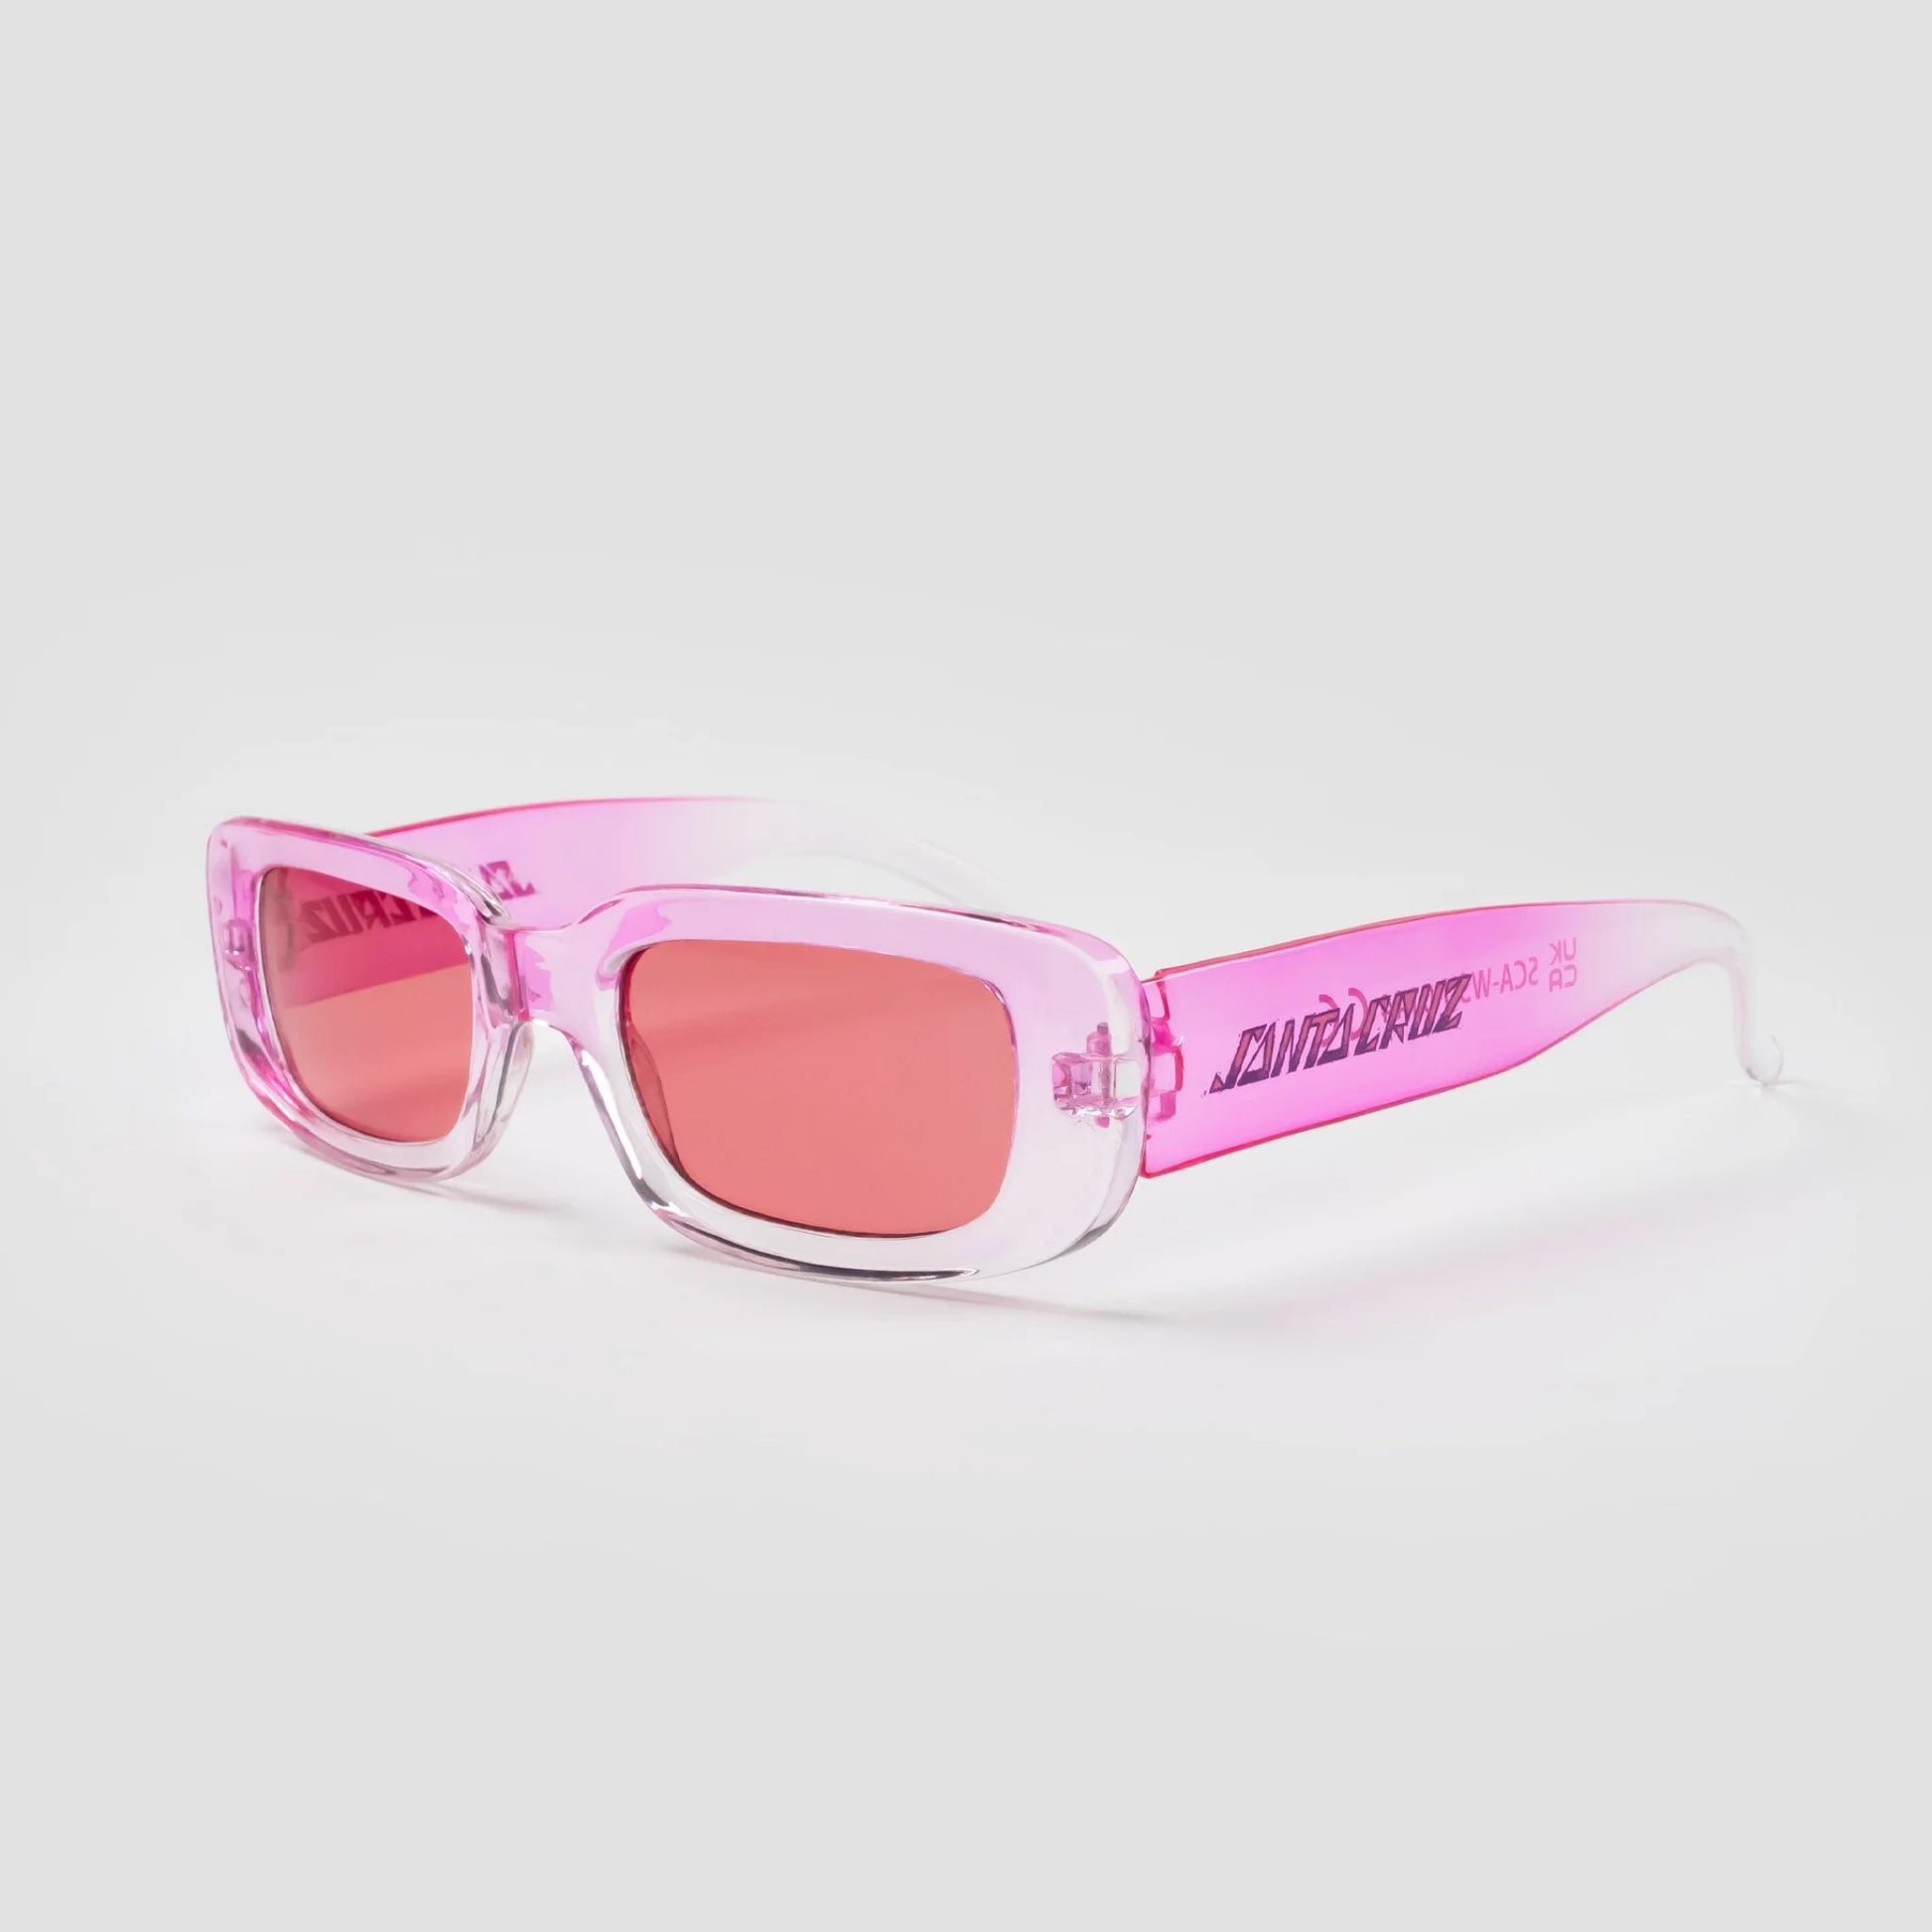 Santa Cruz Paradise Strip Women's Sunglasses - Pink Crystal Fade - Prime Delux Store